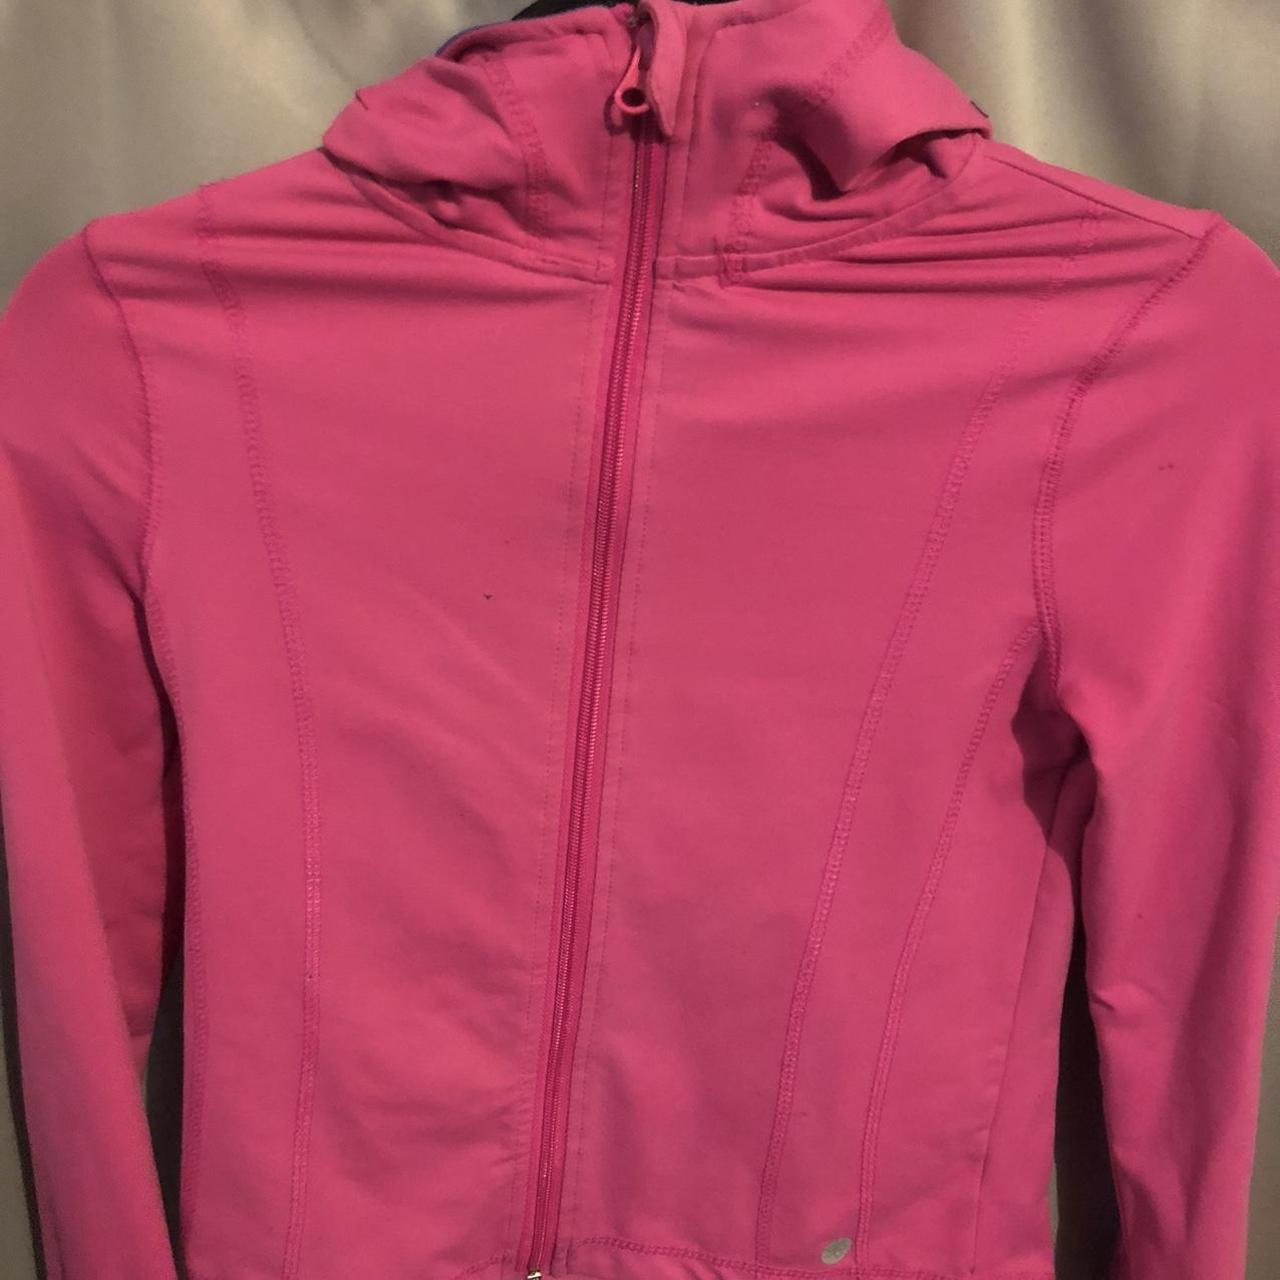 hot pink BBL jacket/workout jacket size large but it... - Depop